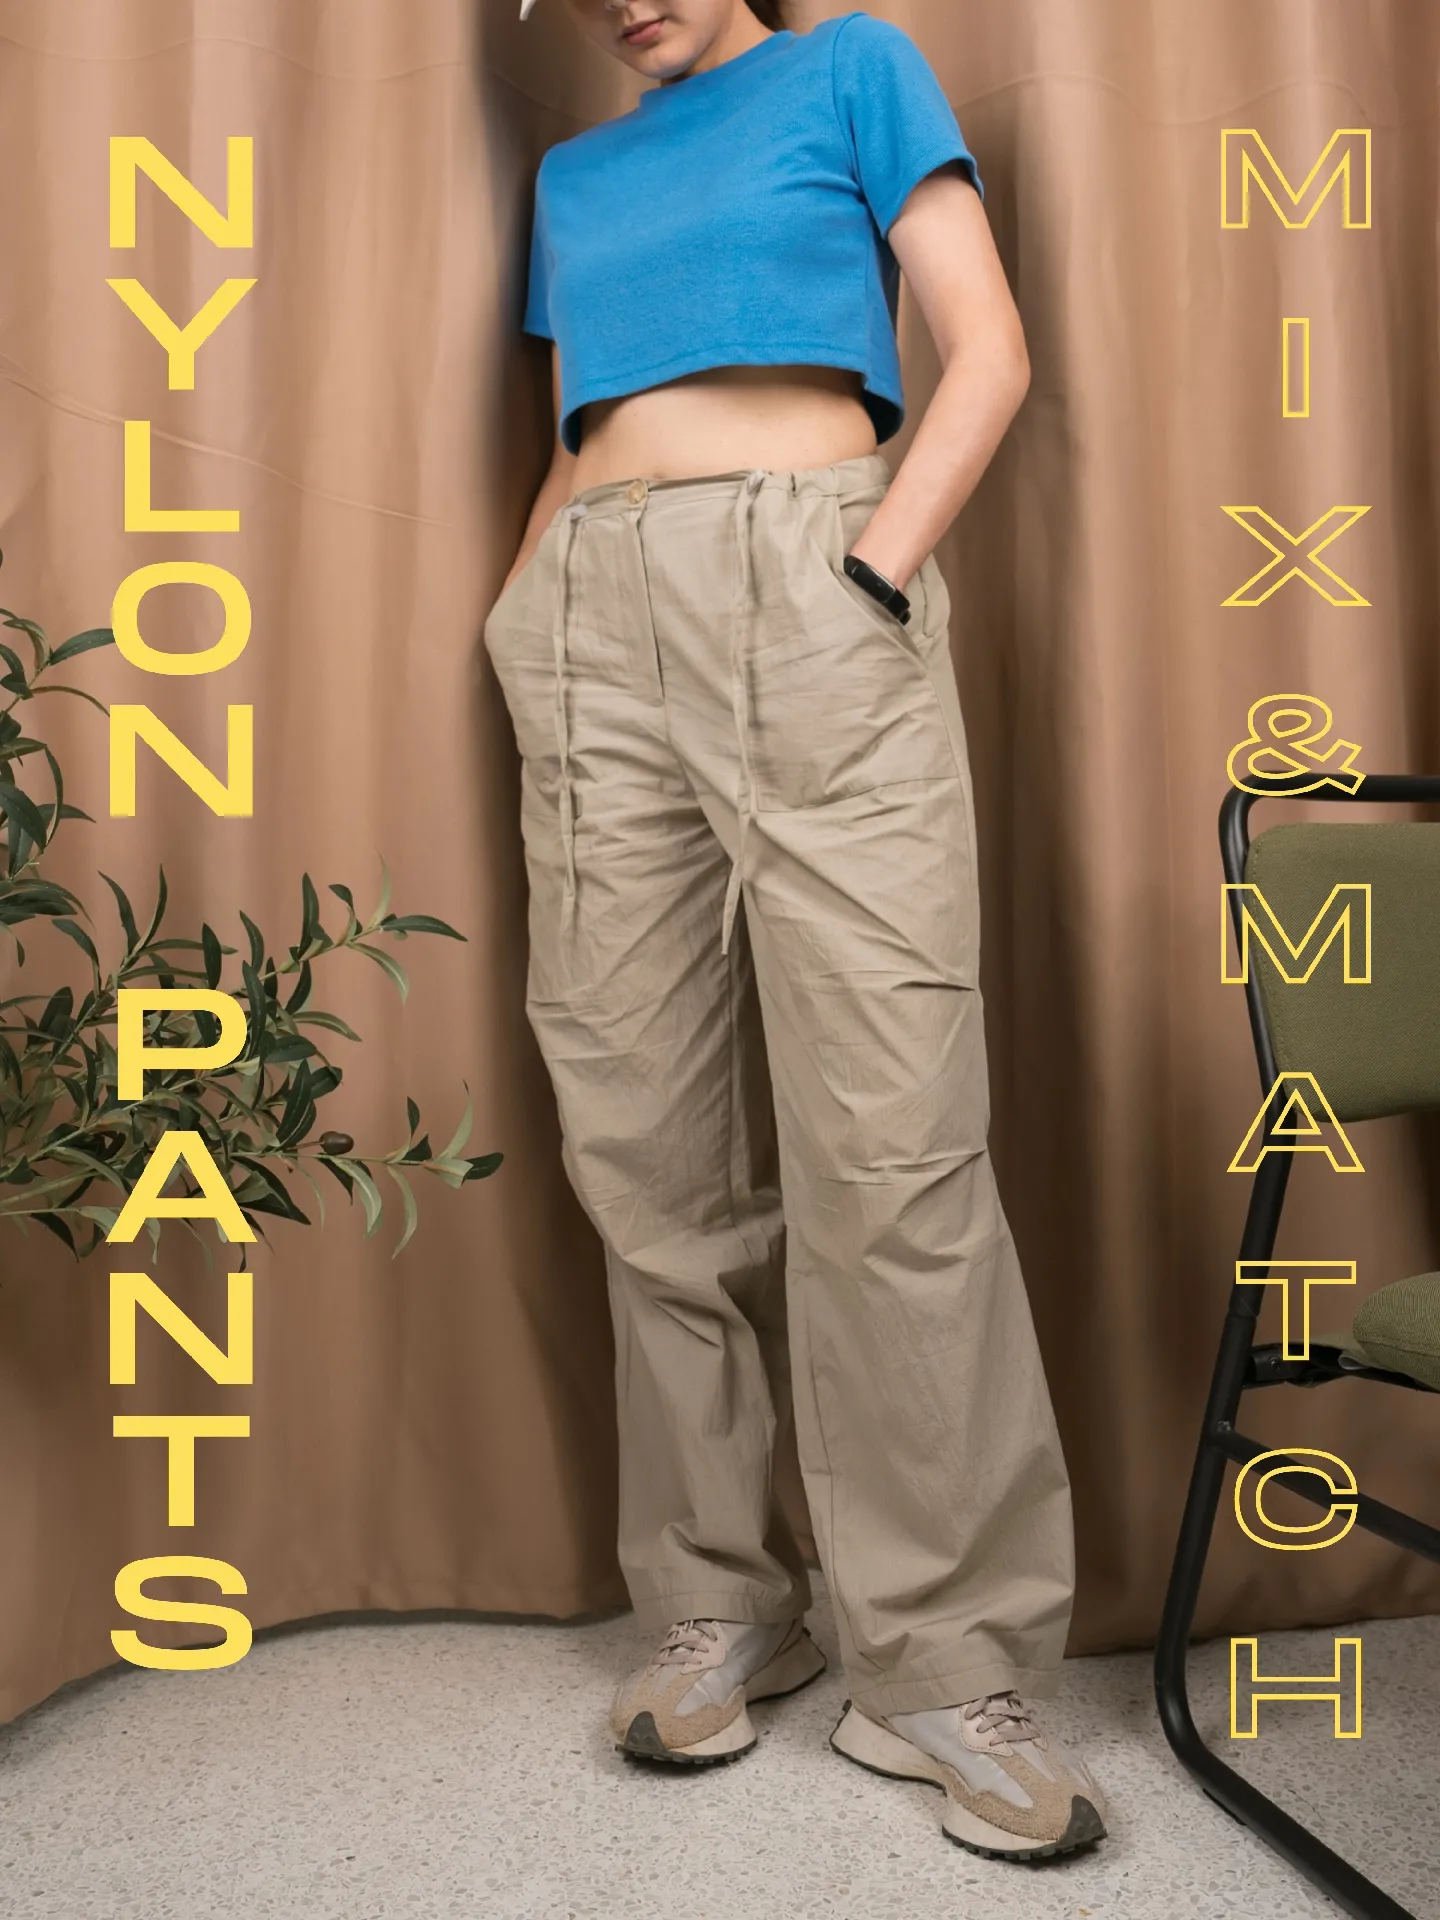 Nylon pants match. Not as hard as it looks!